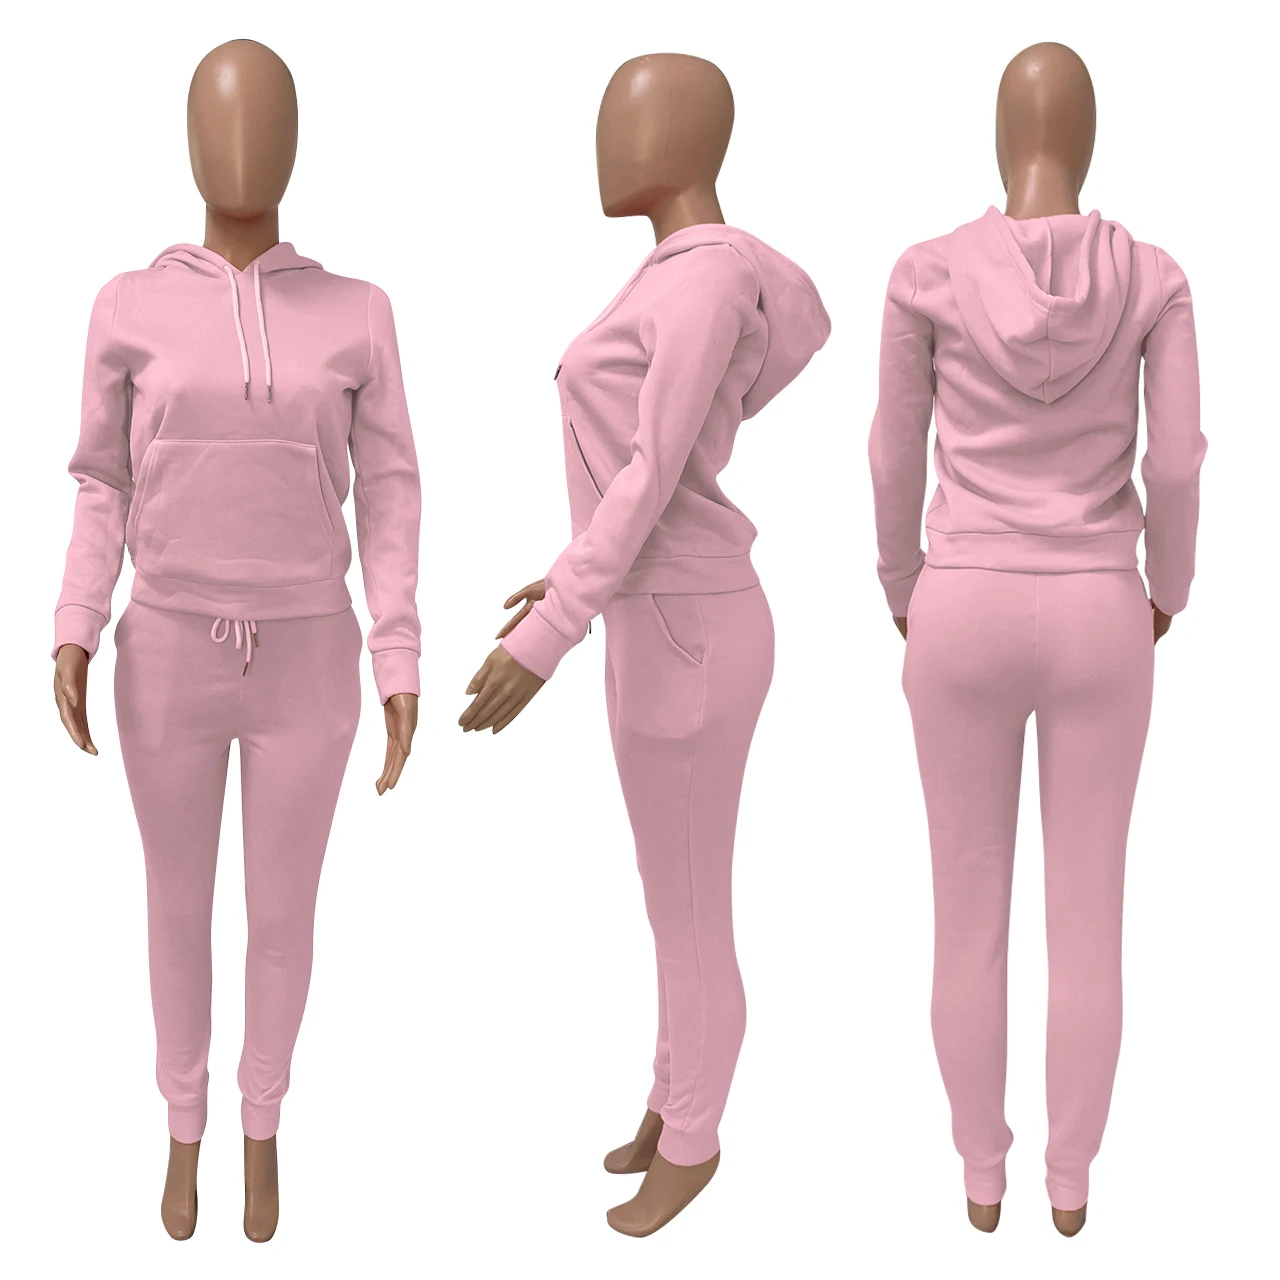 

Q21972 Hot Sale Sweatsuit 2 Piece Set Women Clothing Solid Jogger Cropped Sweatshirt Hoodies Sets Casual Swear Suits For Women, Pink/yellow/black/khaki/gray